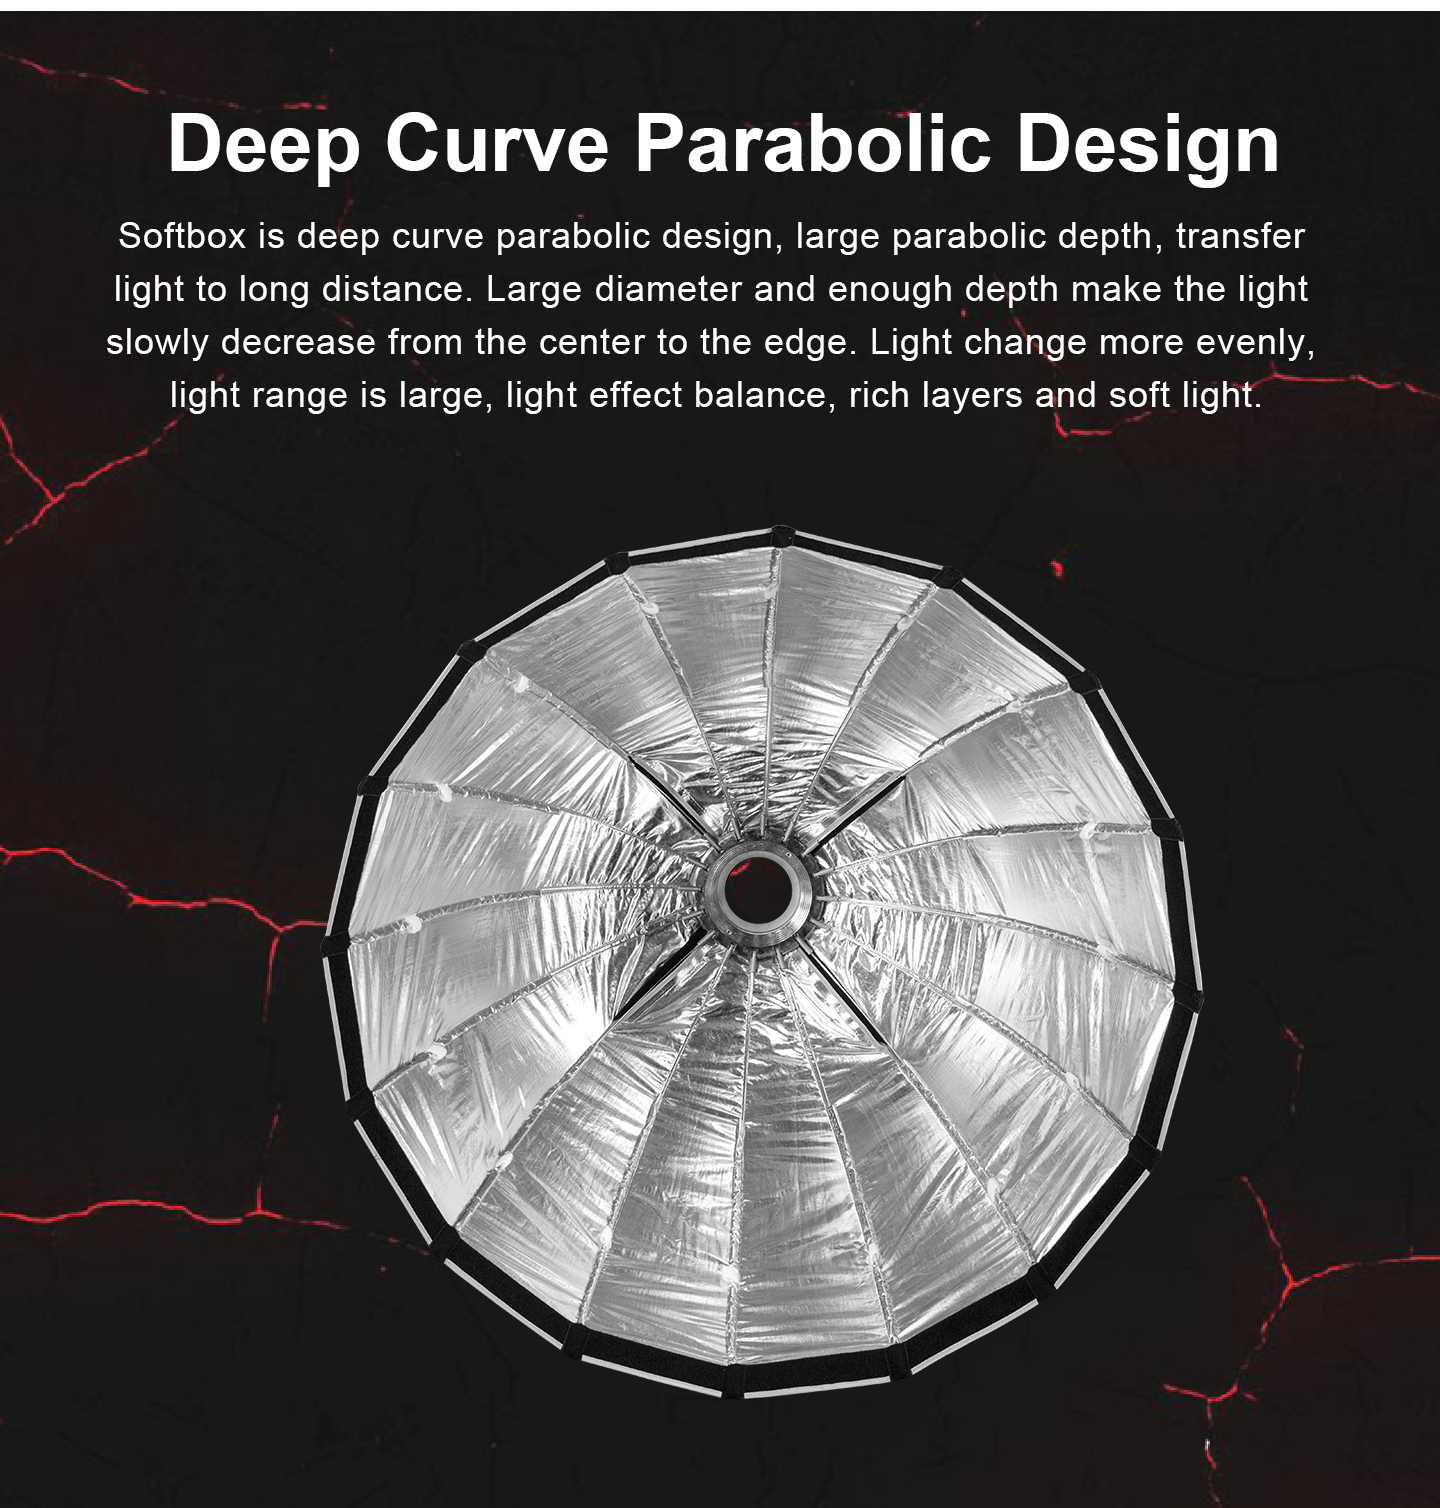 Deep Curve Parabolic Design